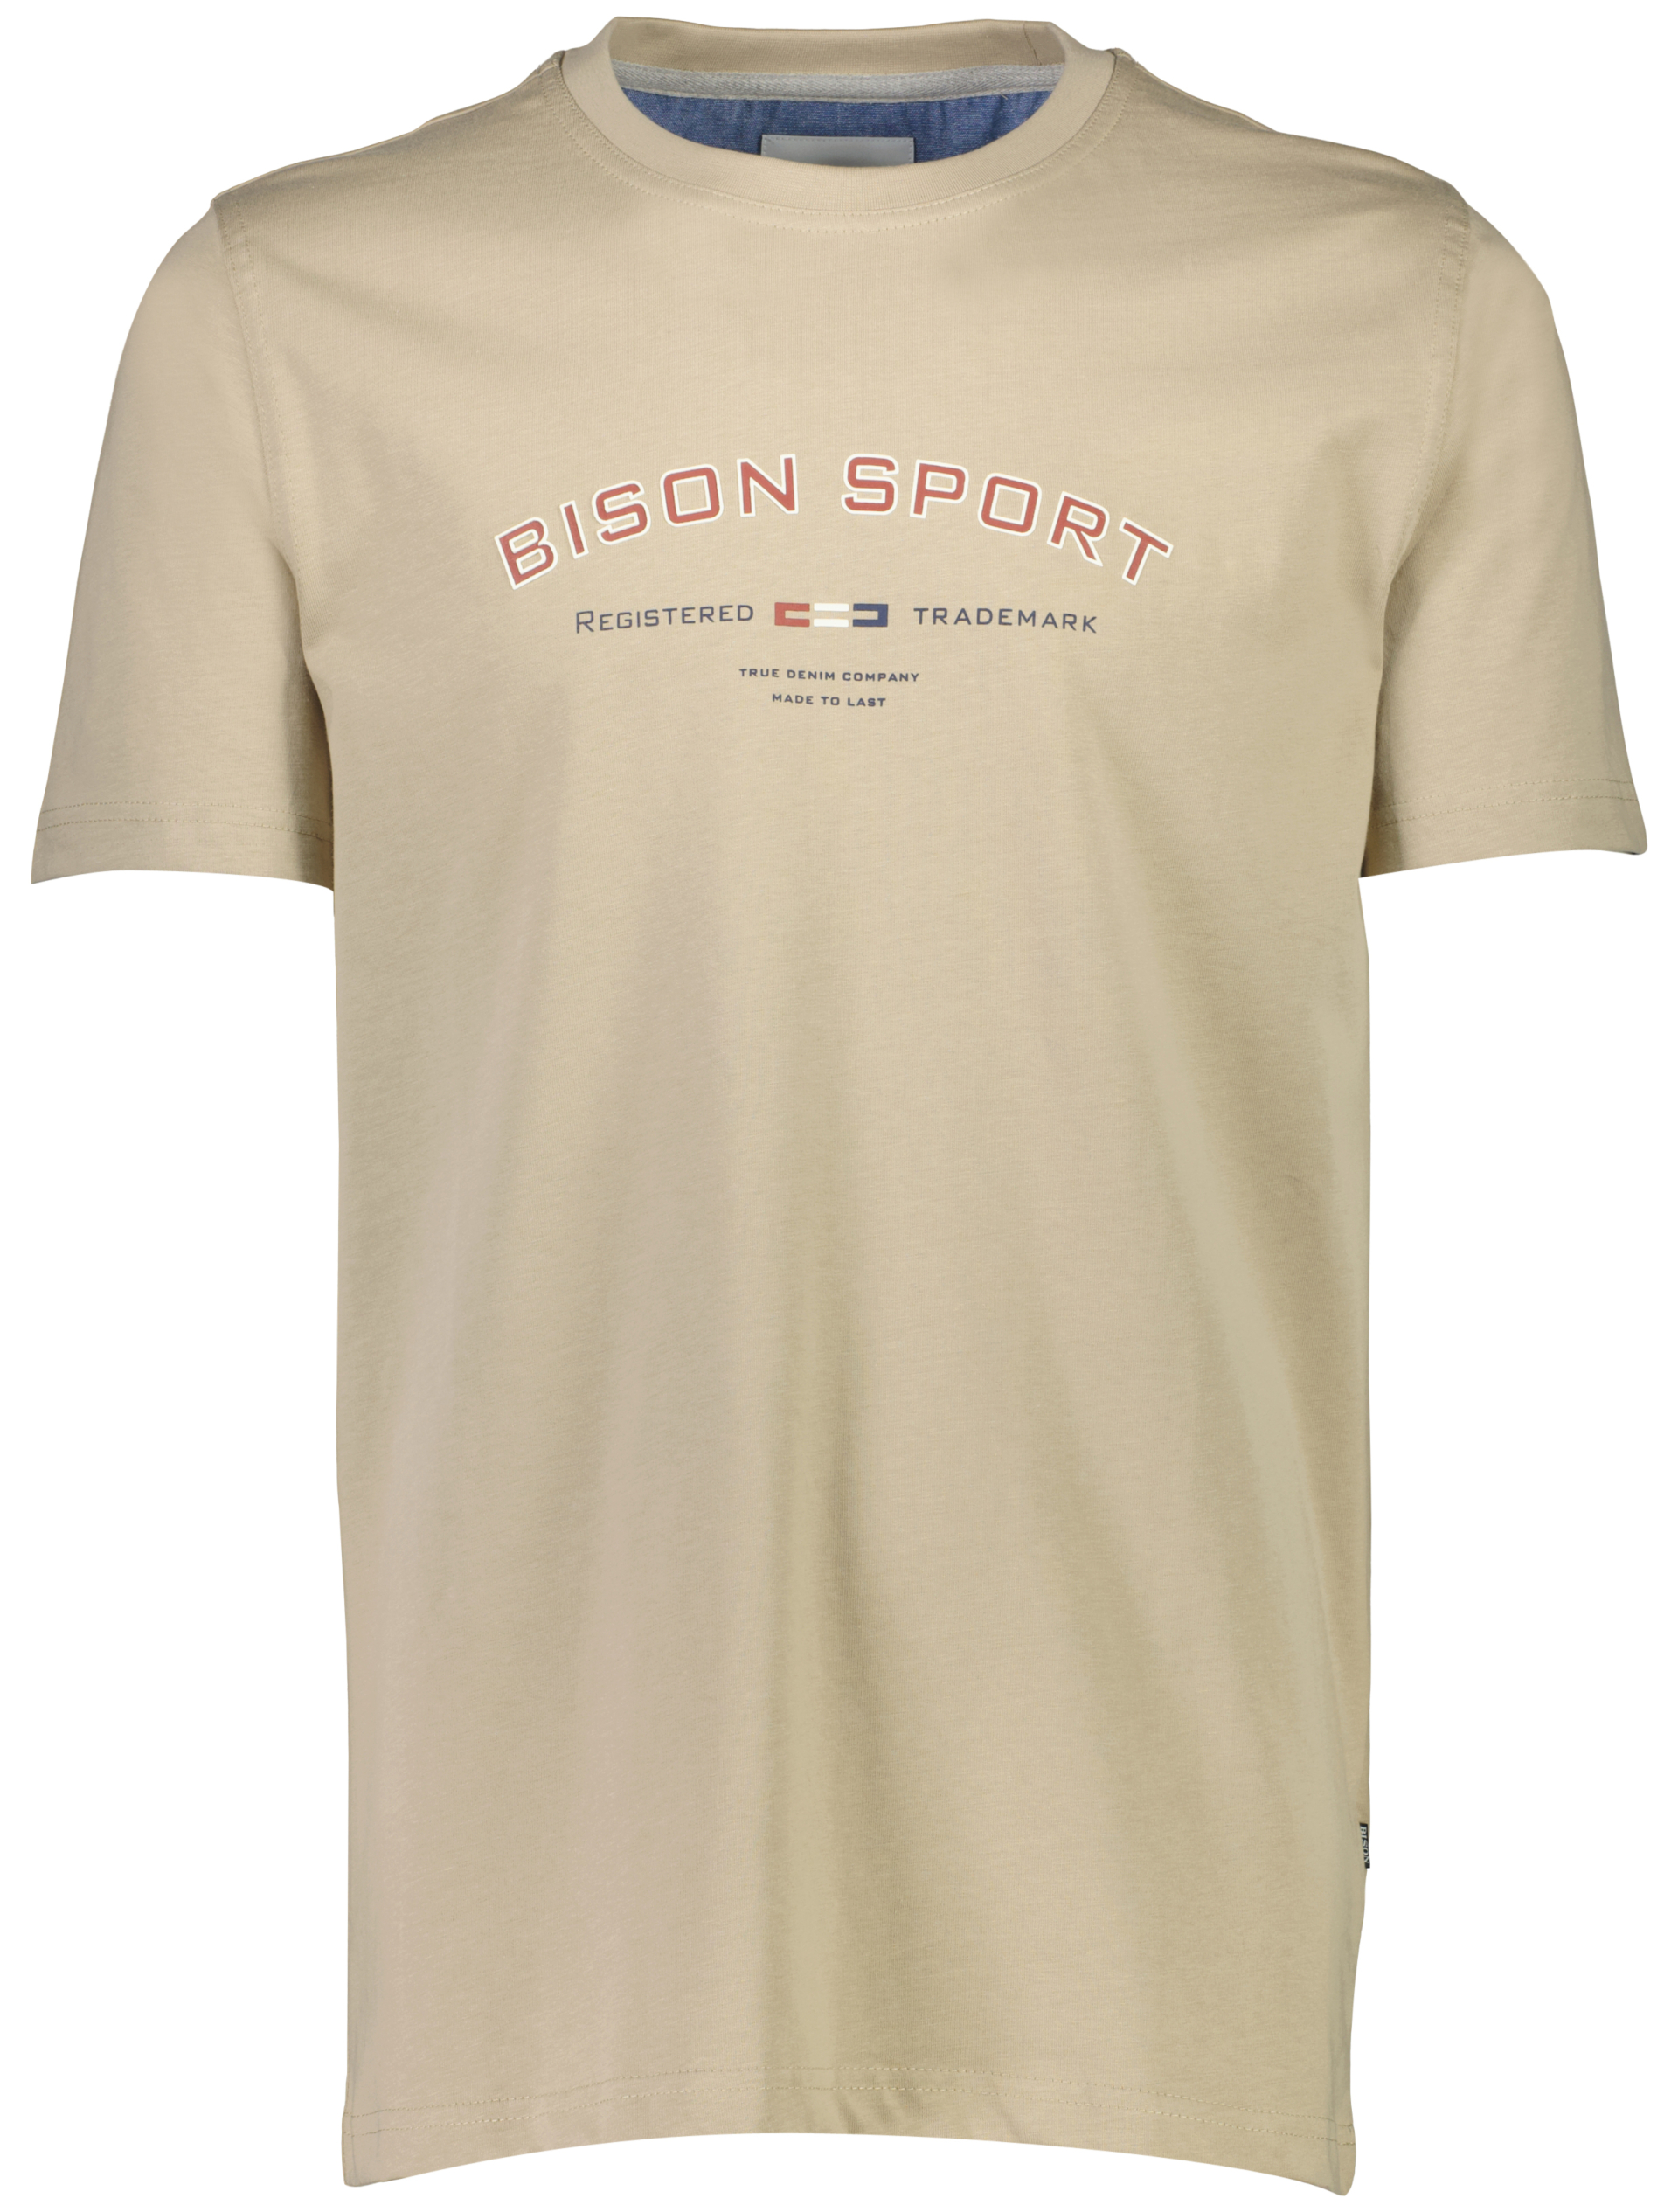 Bison T-shirt sand / sand